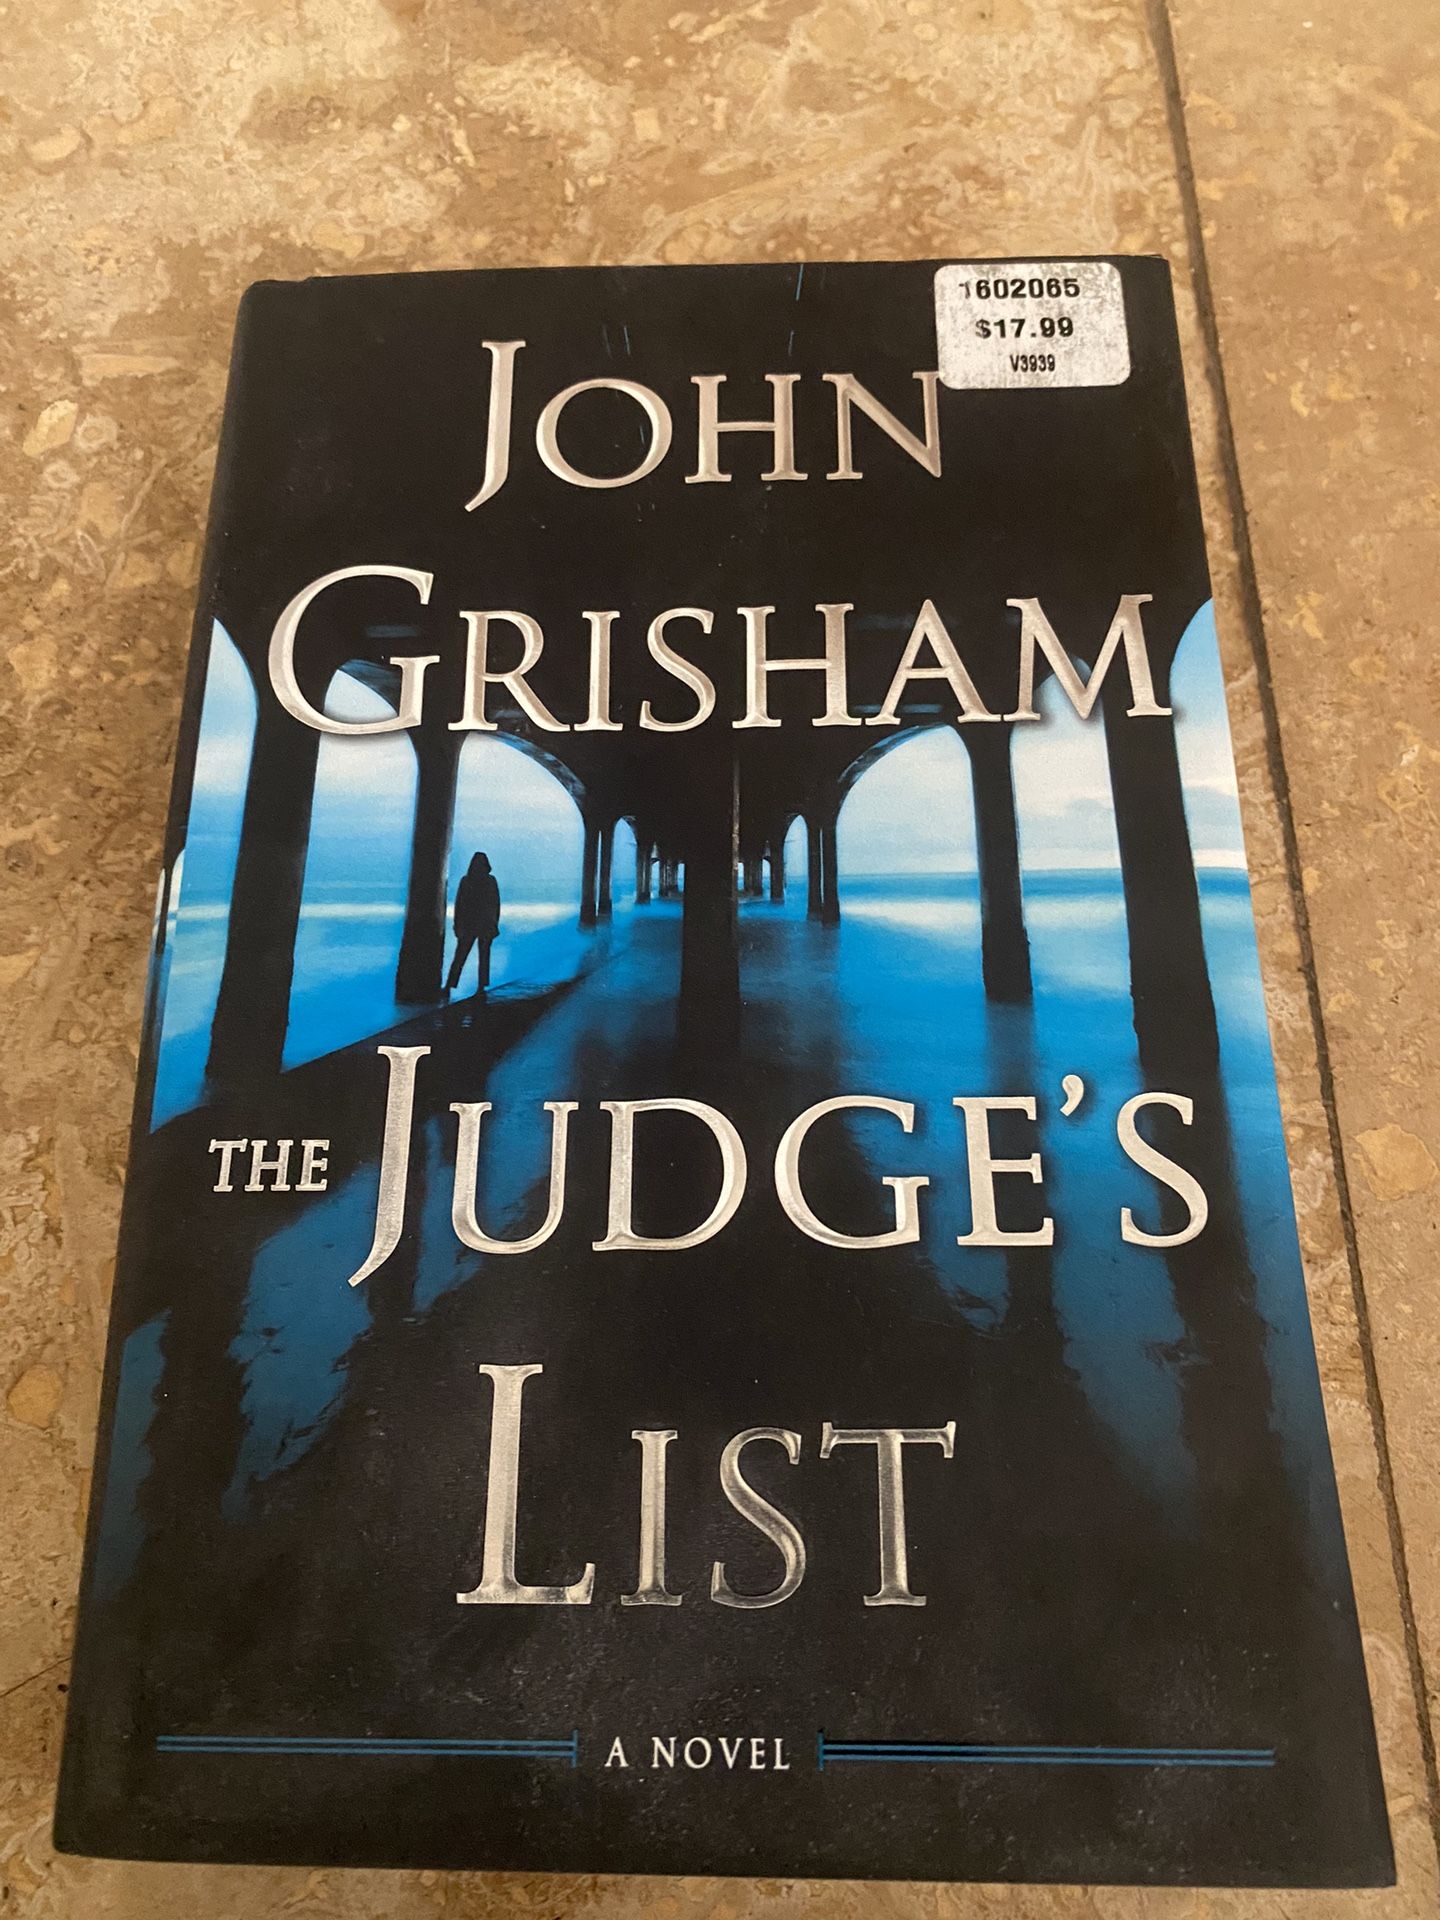 John Grisham Hardcover Book 